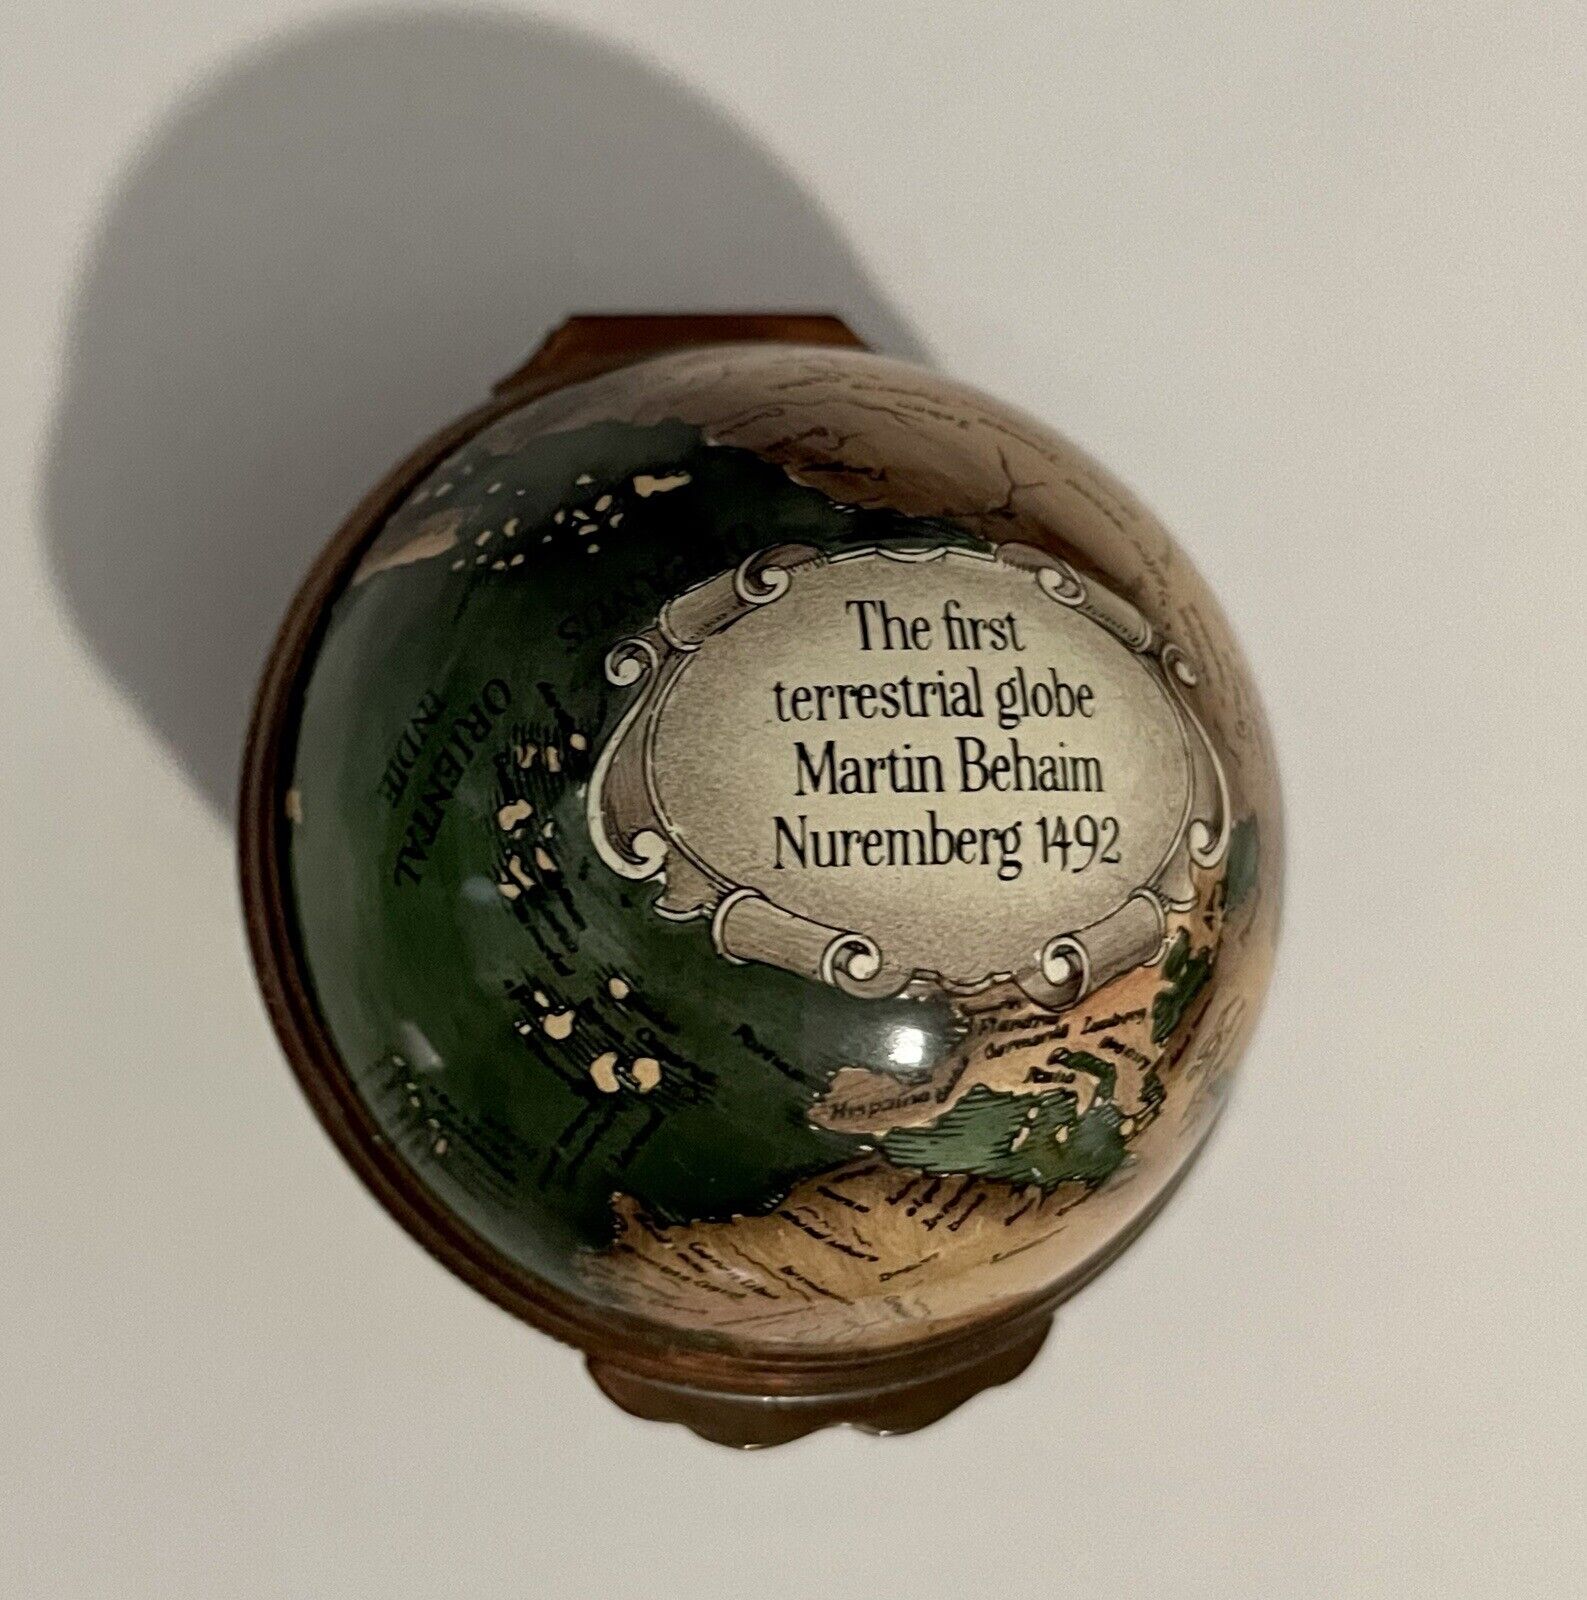 Halcyon Days Enamel The First Terrestrial Globe Martin Behiam Nuremberg Box